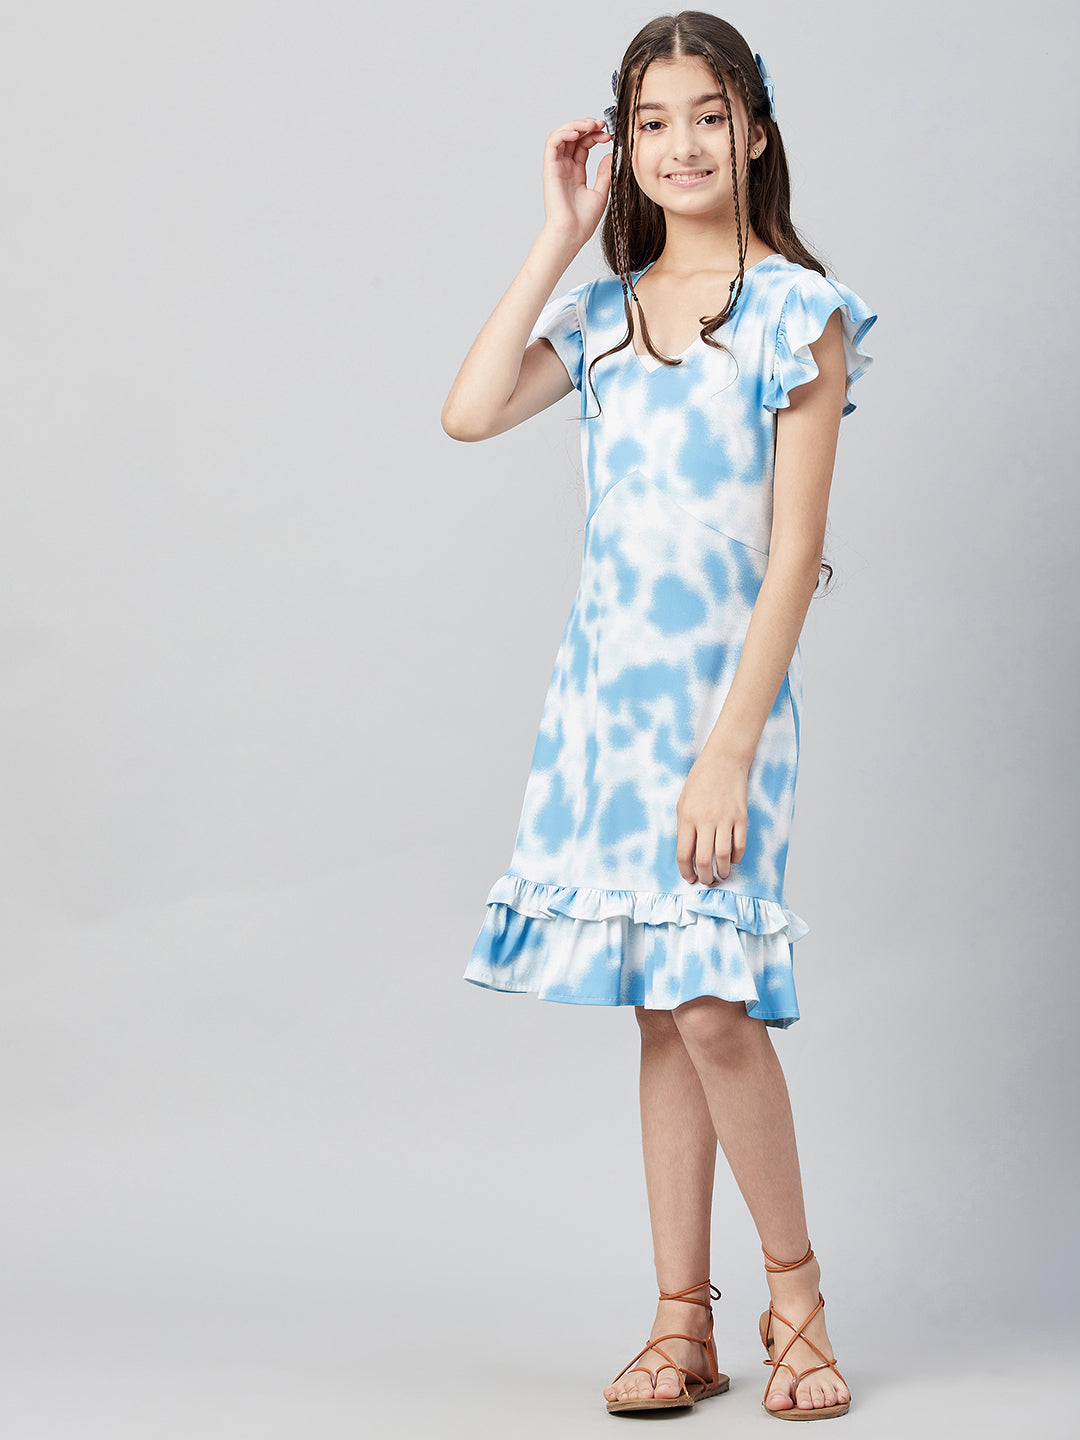 Athena Girl Blue Tie and Dye A-Line Dress - Athena Lifestyle